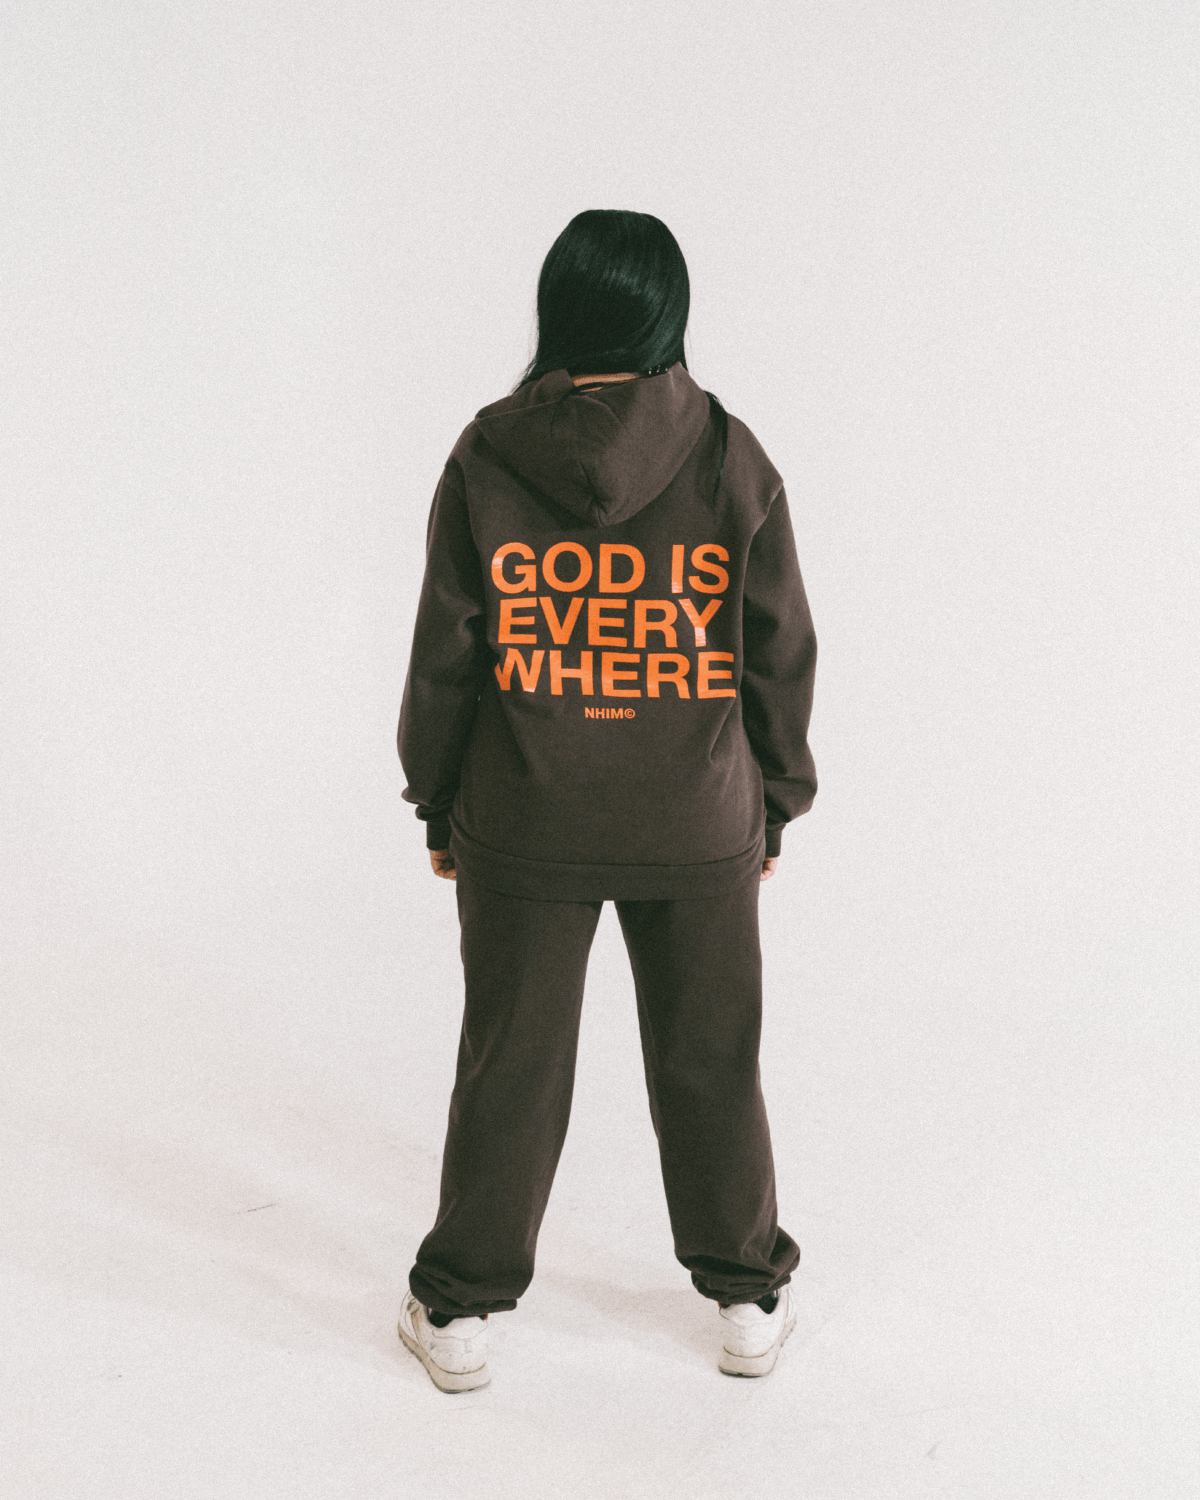 Christian hoodie sweatshirt. GOD IS EVERYWHERE HOODIE (Brown). NHIM Apparel Christian clothing company.